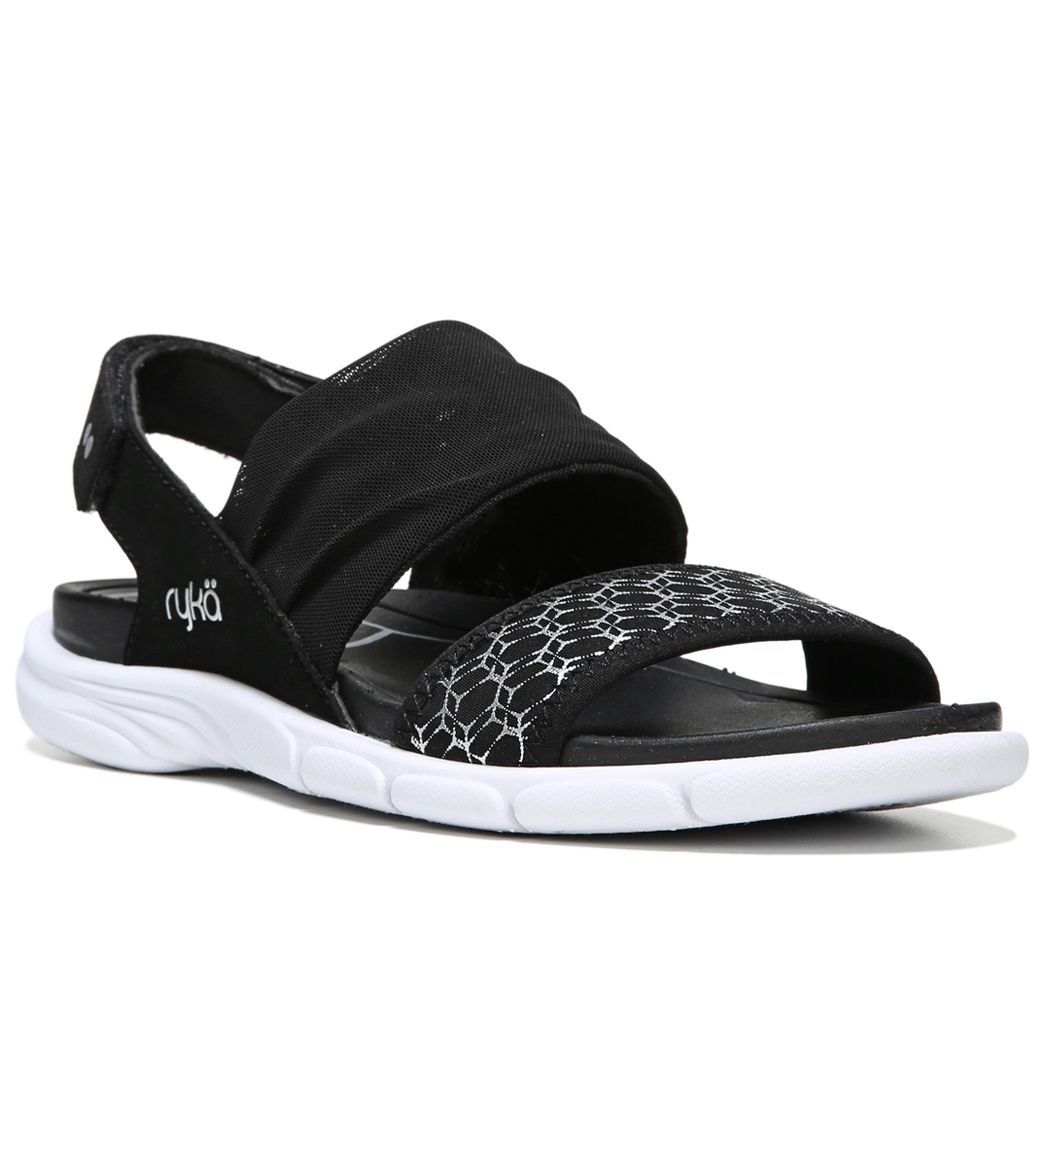 Ryka Women's Rodanthe Sandals - Black/Chrome Silver 5 Eva/Foam - Swimoutlet.com